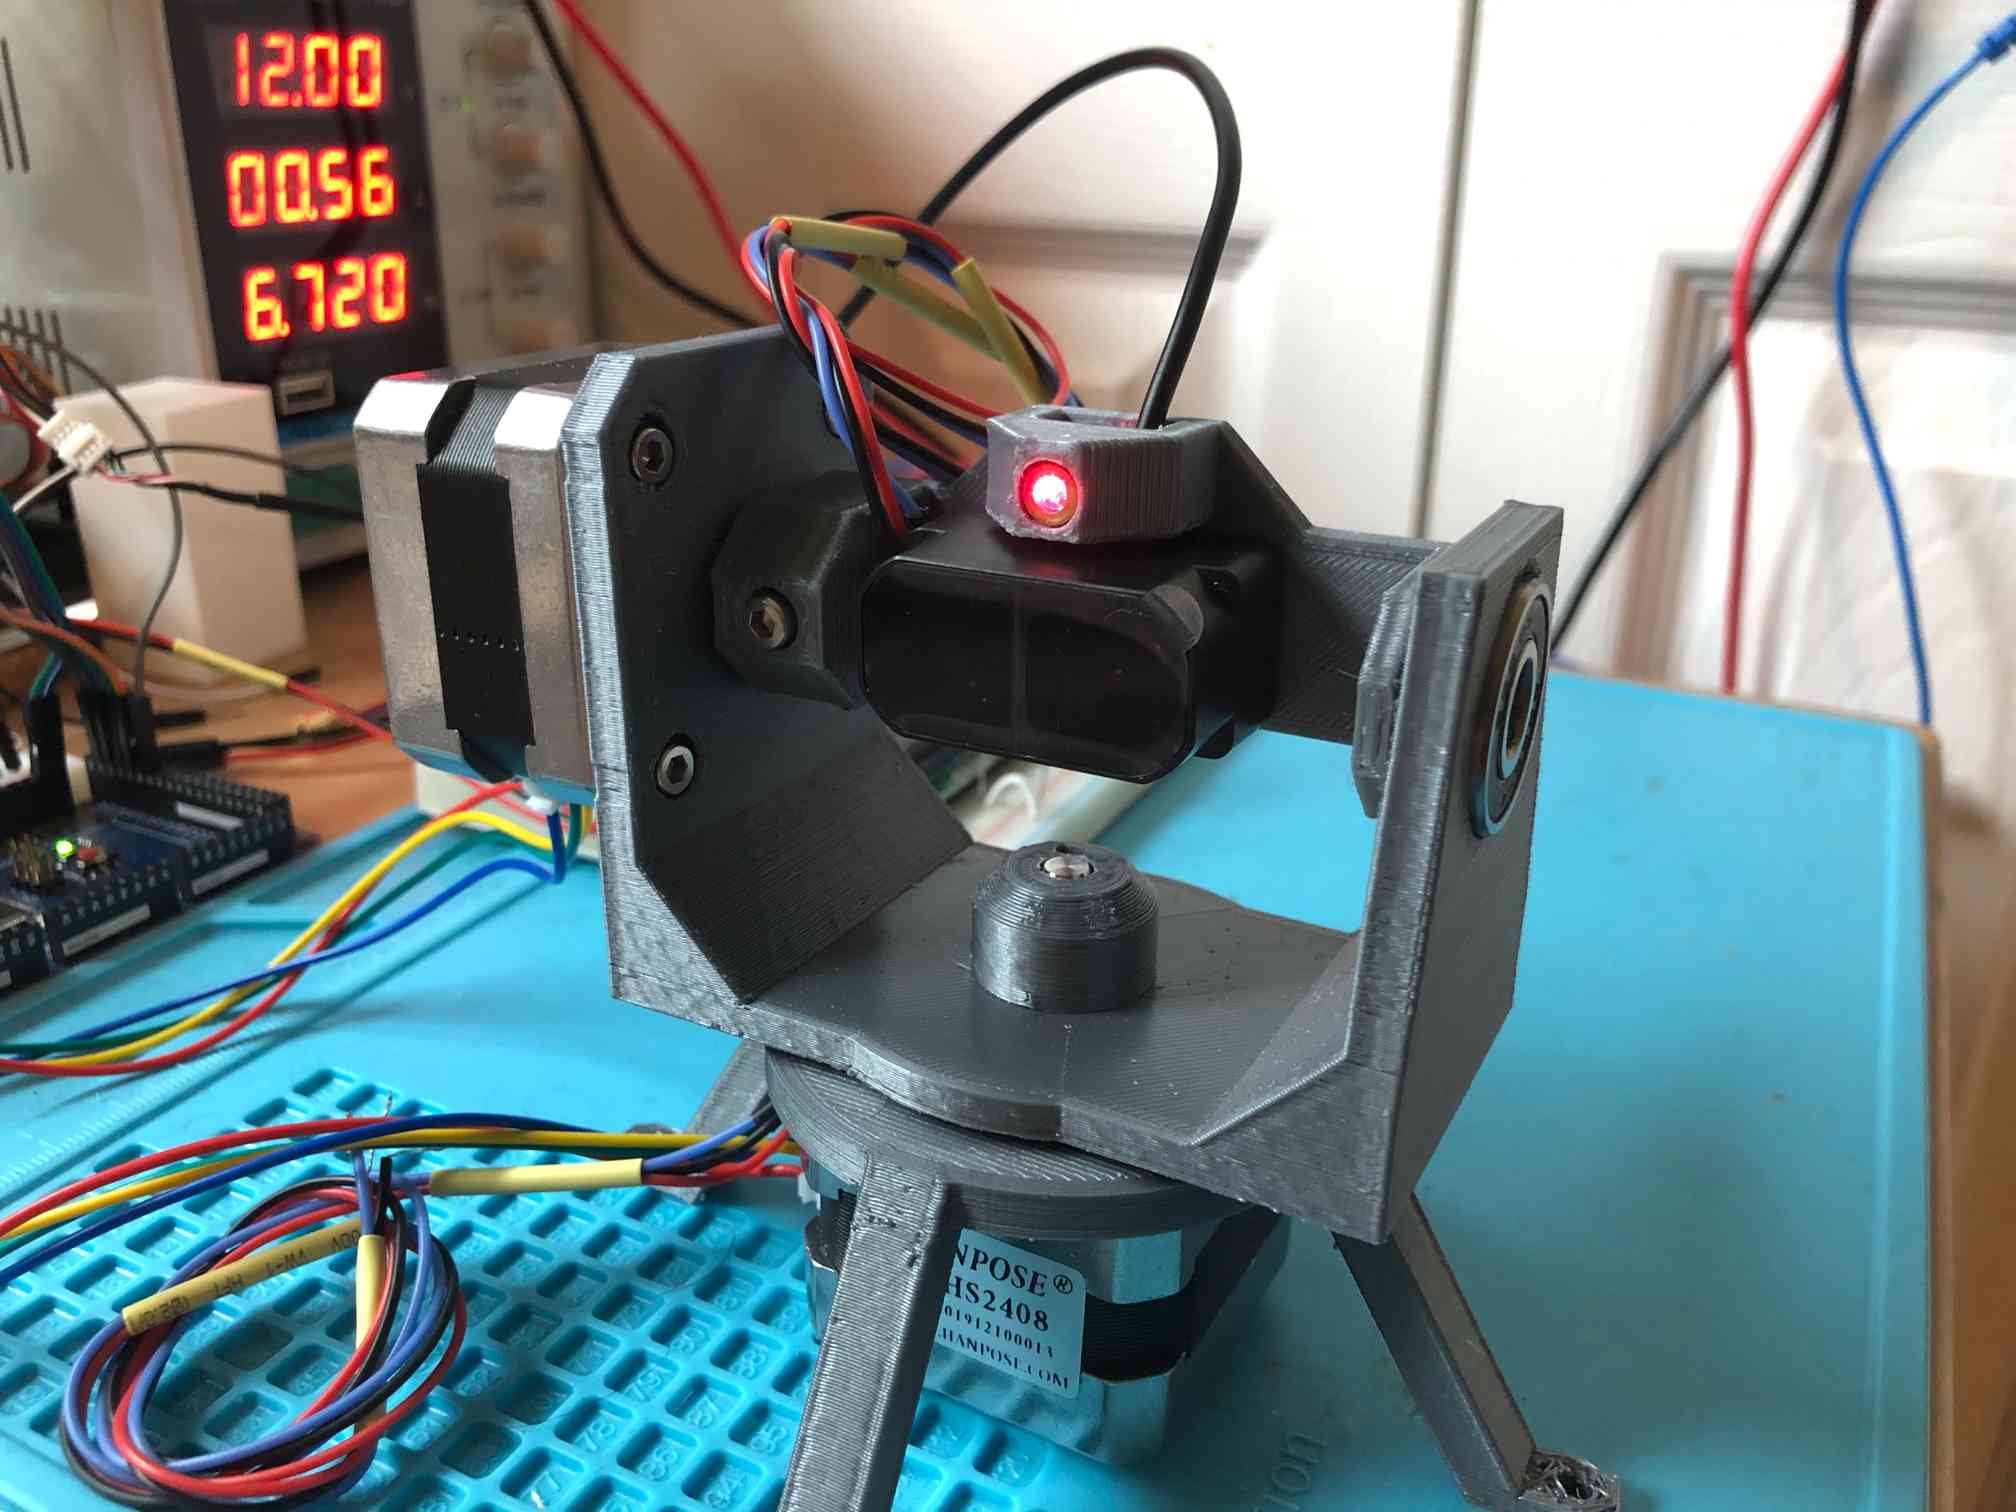 home-printed laser testing rig